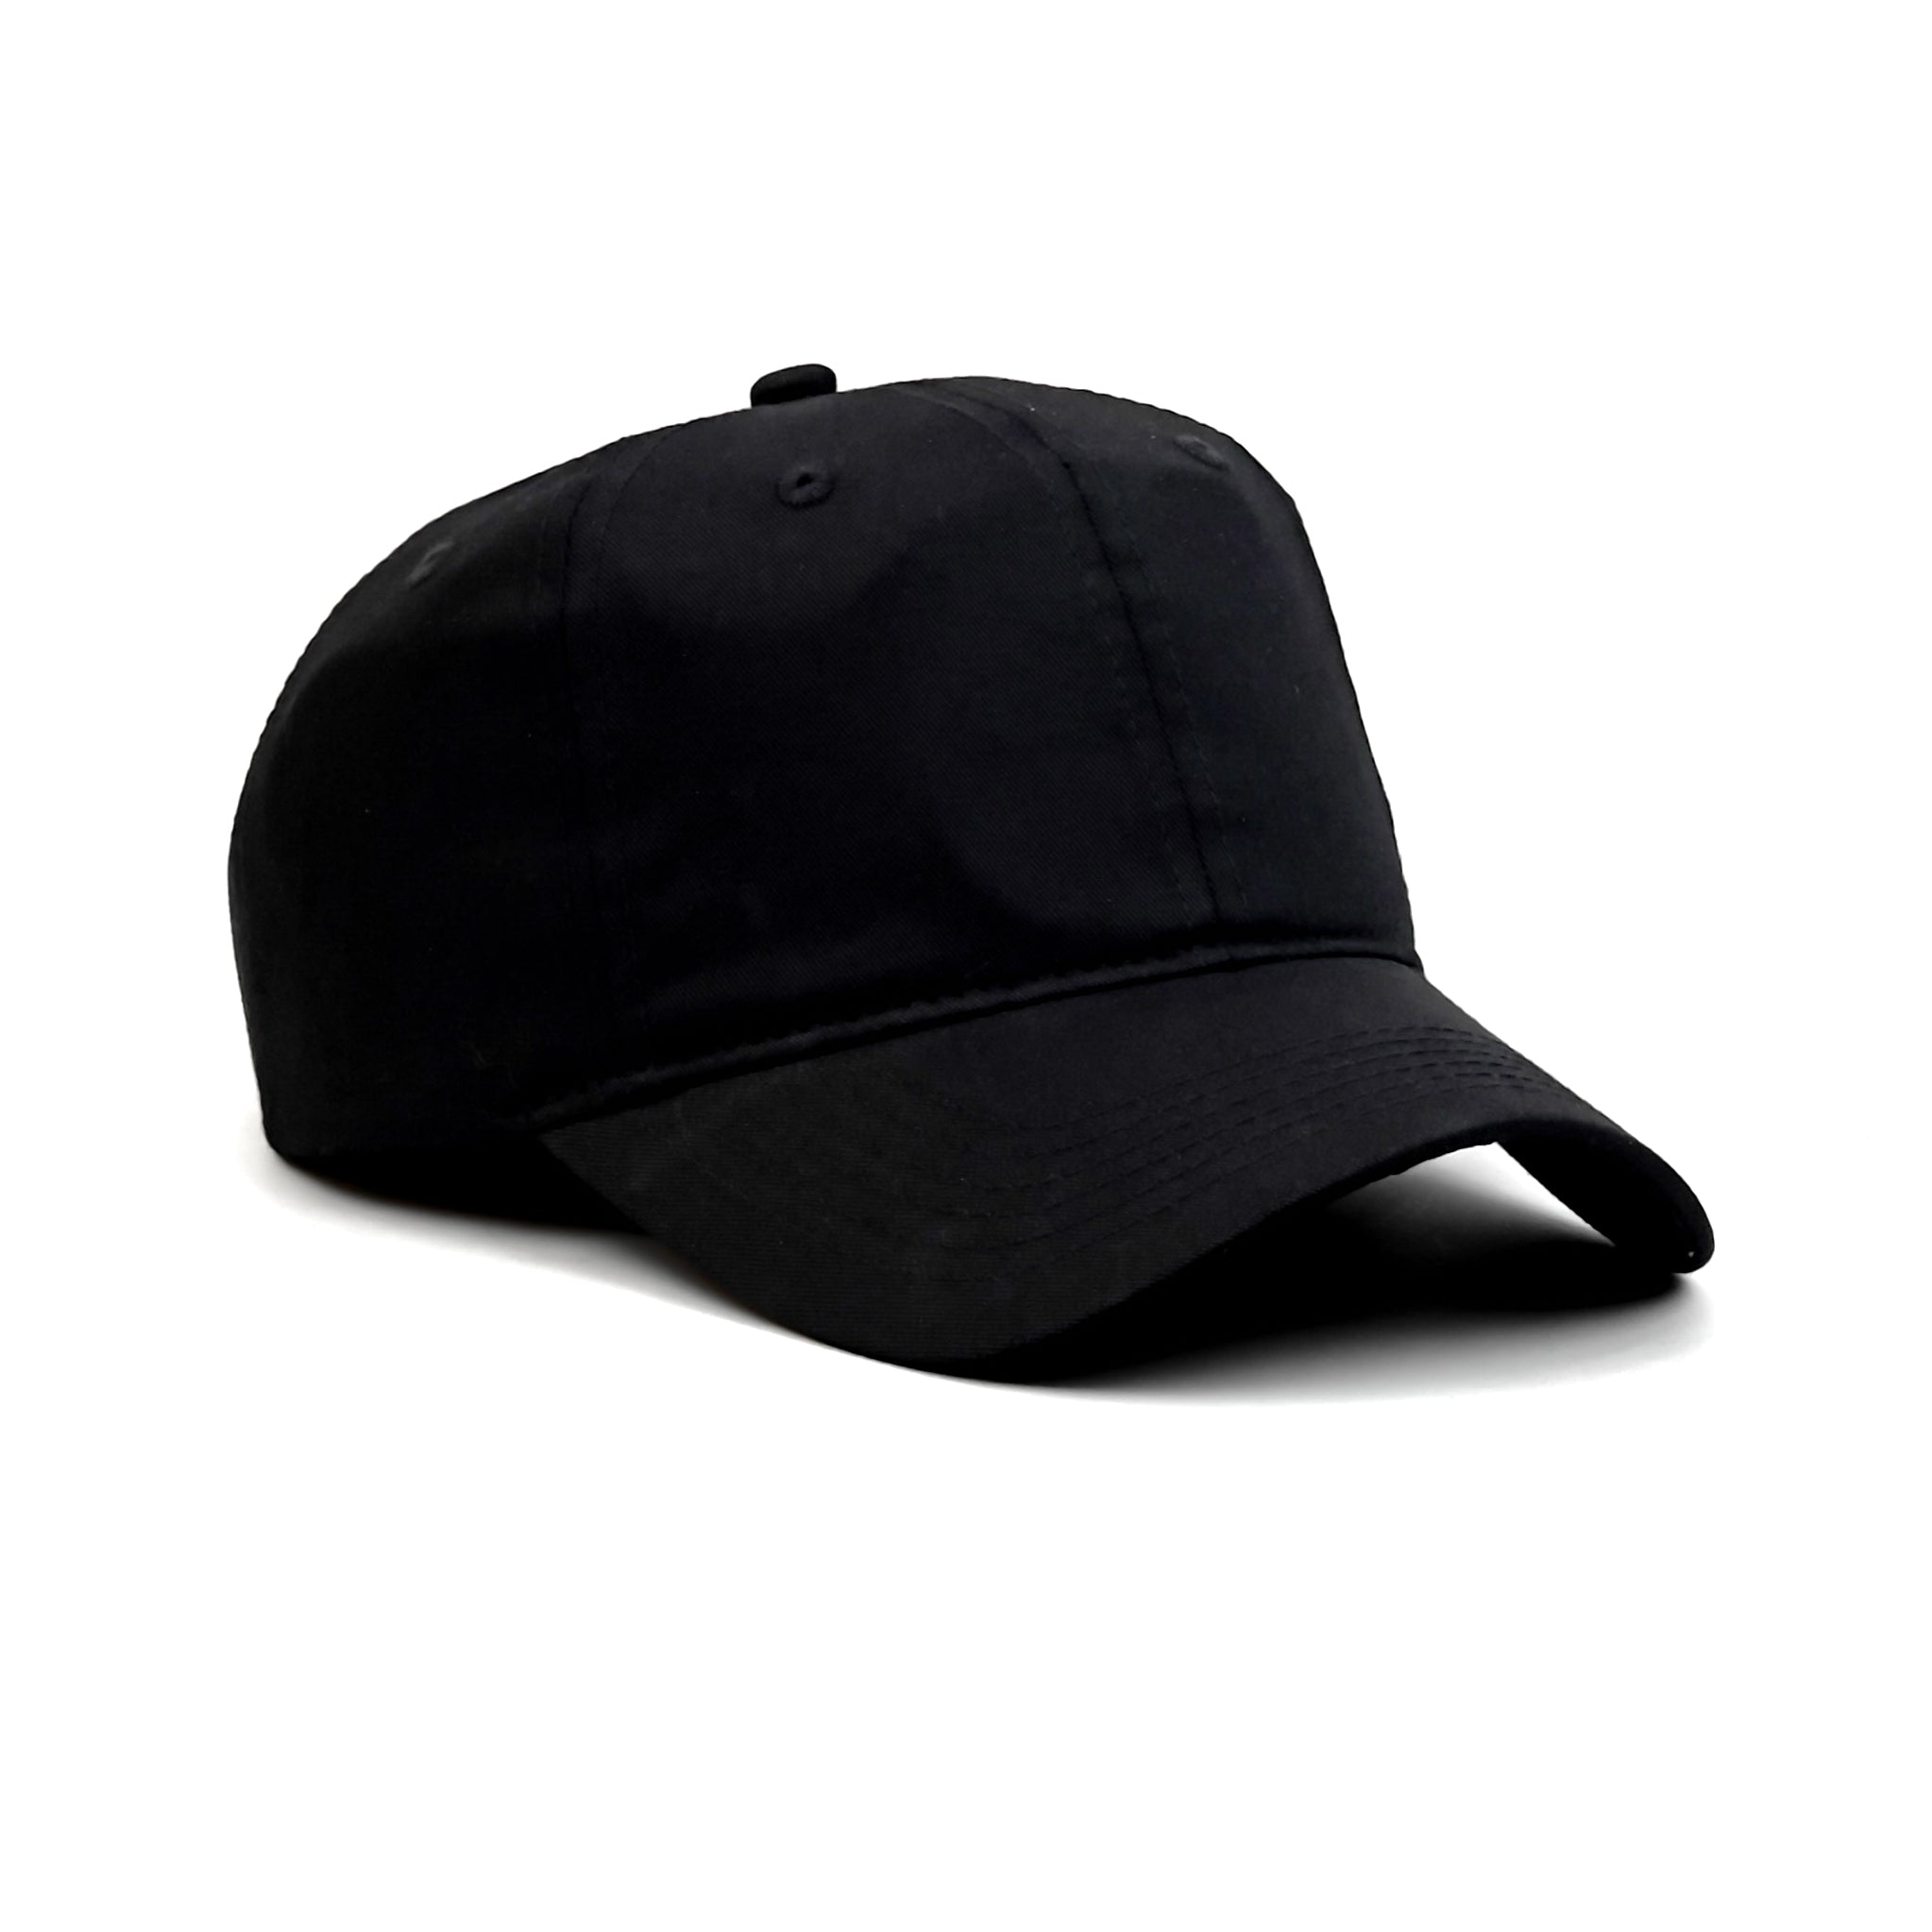 HEAD GEAR BASIC BLACK CAP – Head Gear